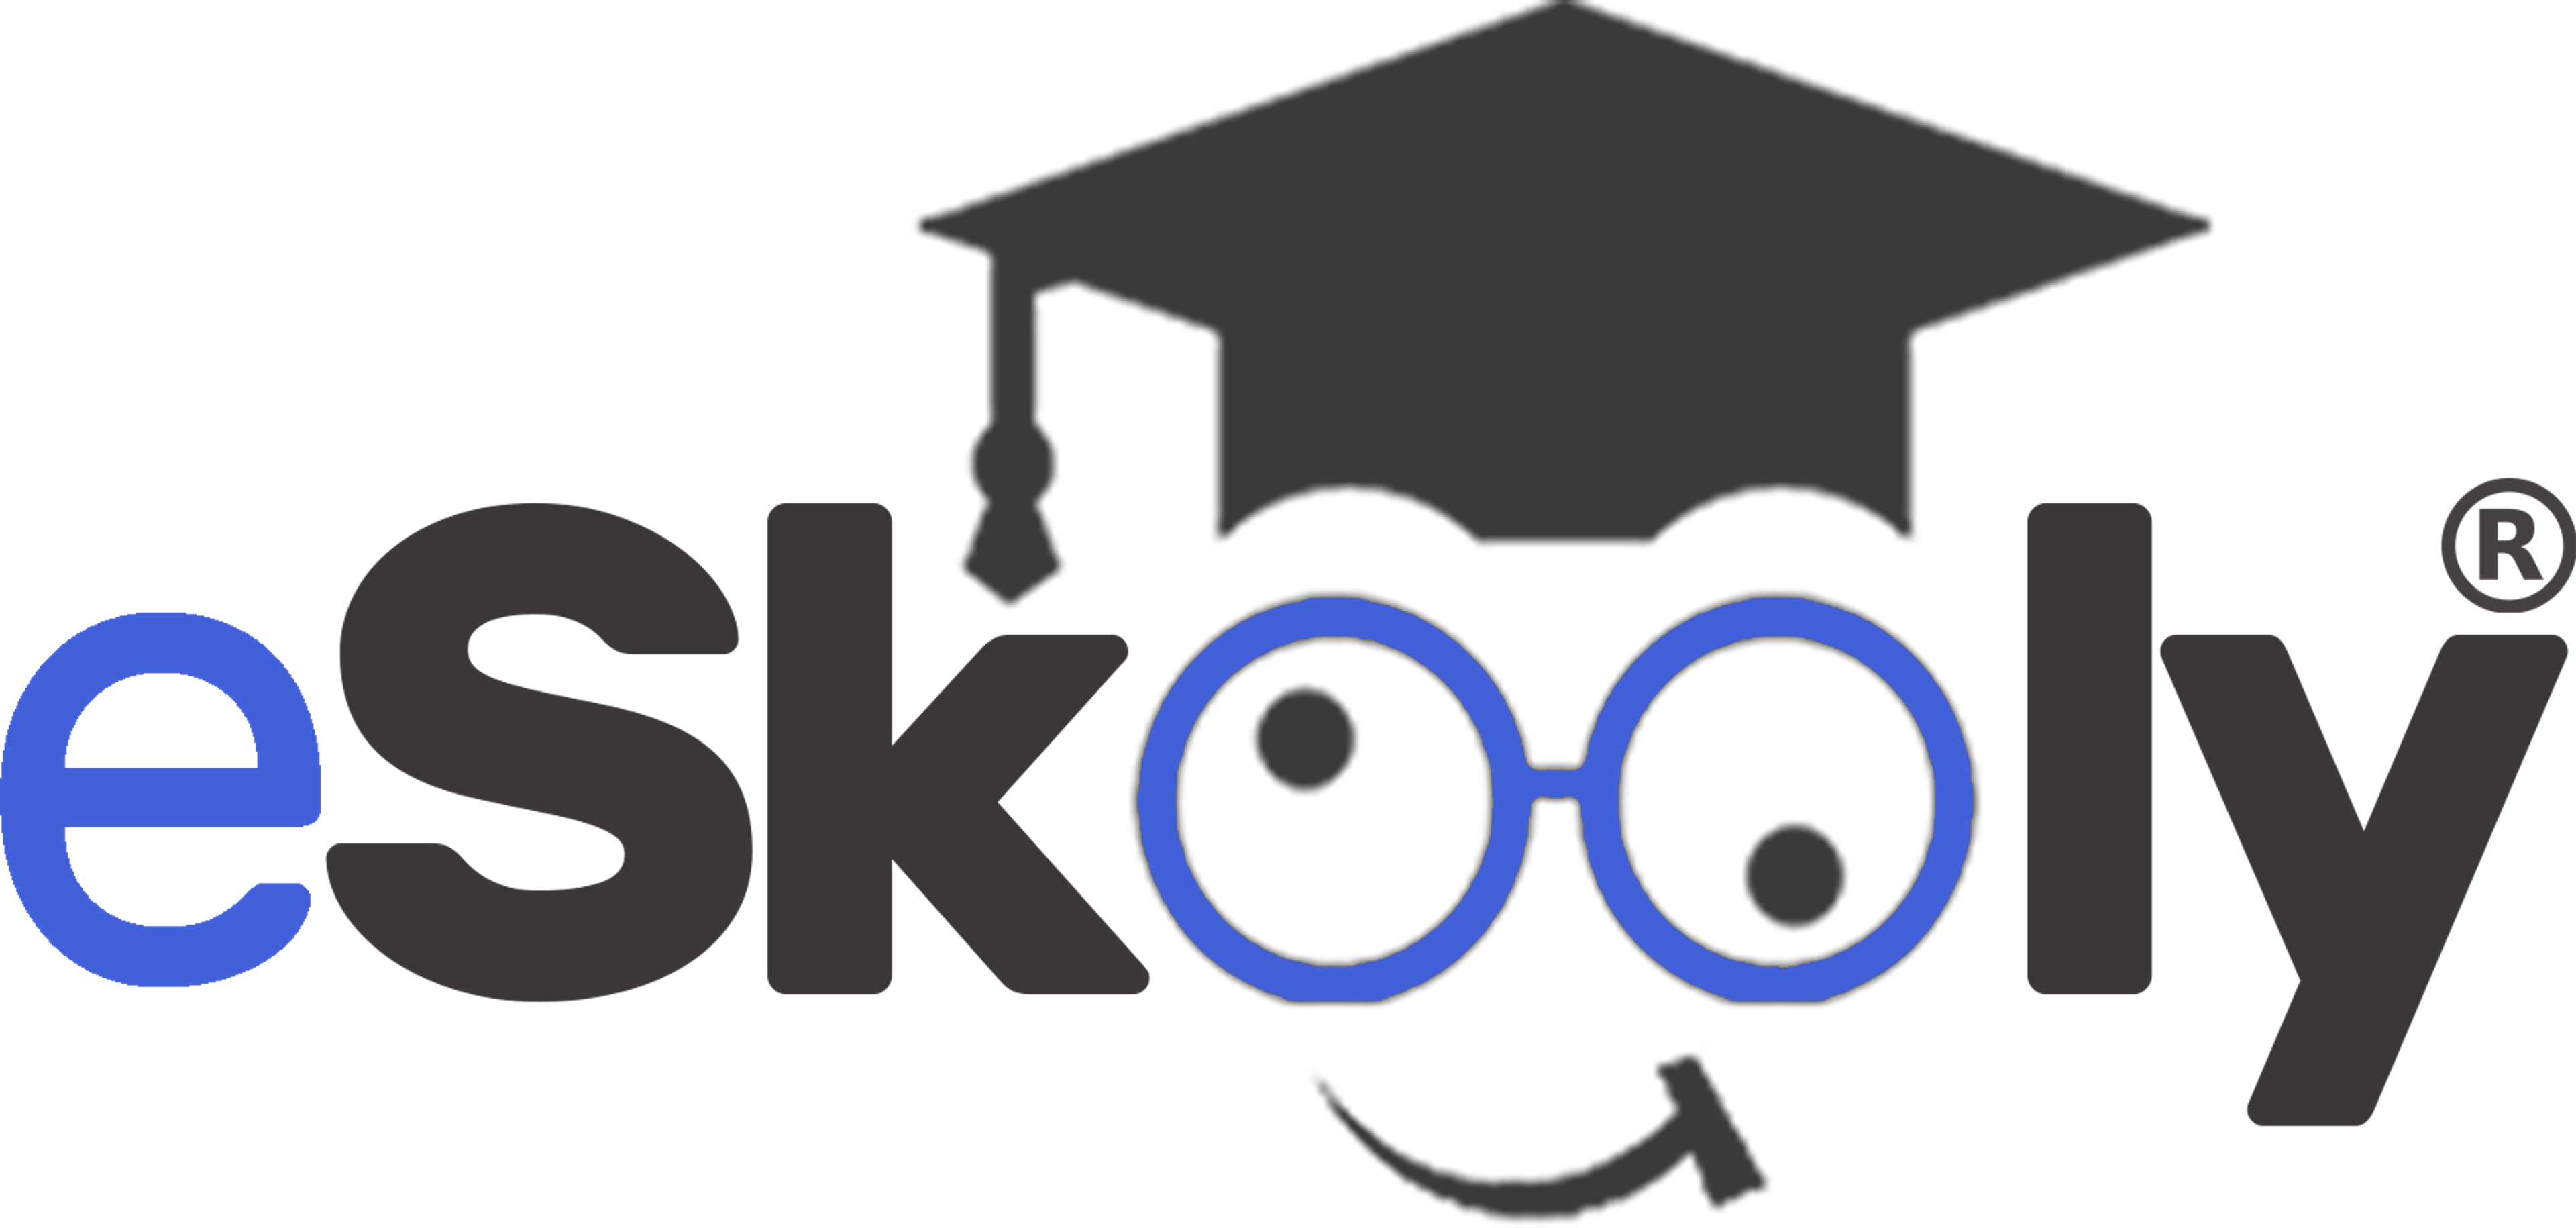 eSkooly Logo